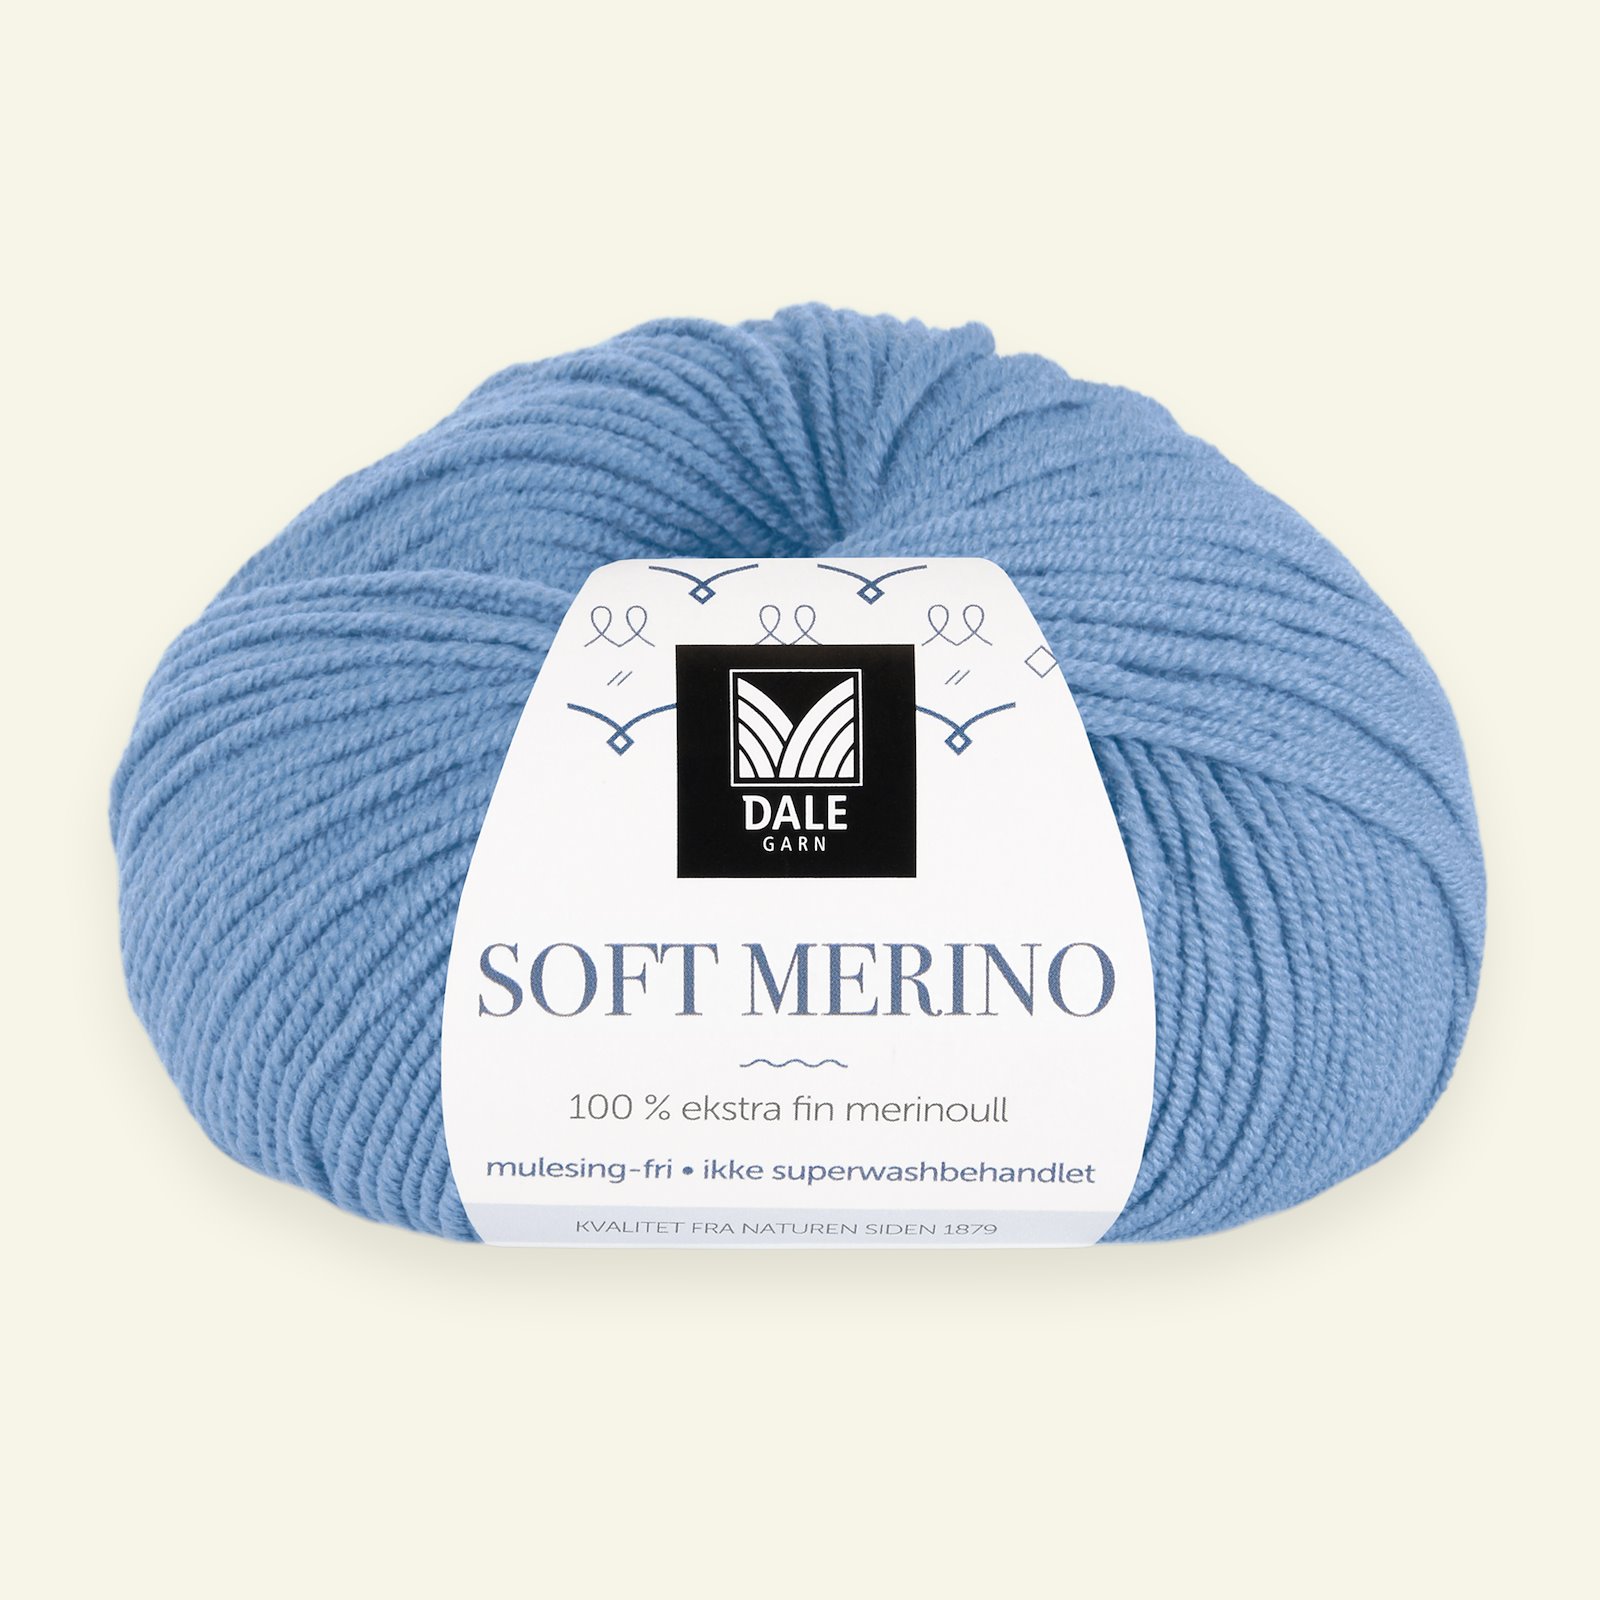 Dale Garn, 100% extra fine merino wool yarn, "Soft Merino", blue (3027) 90000348_pack